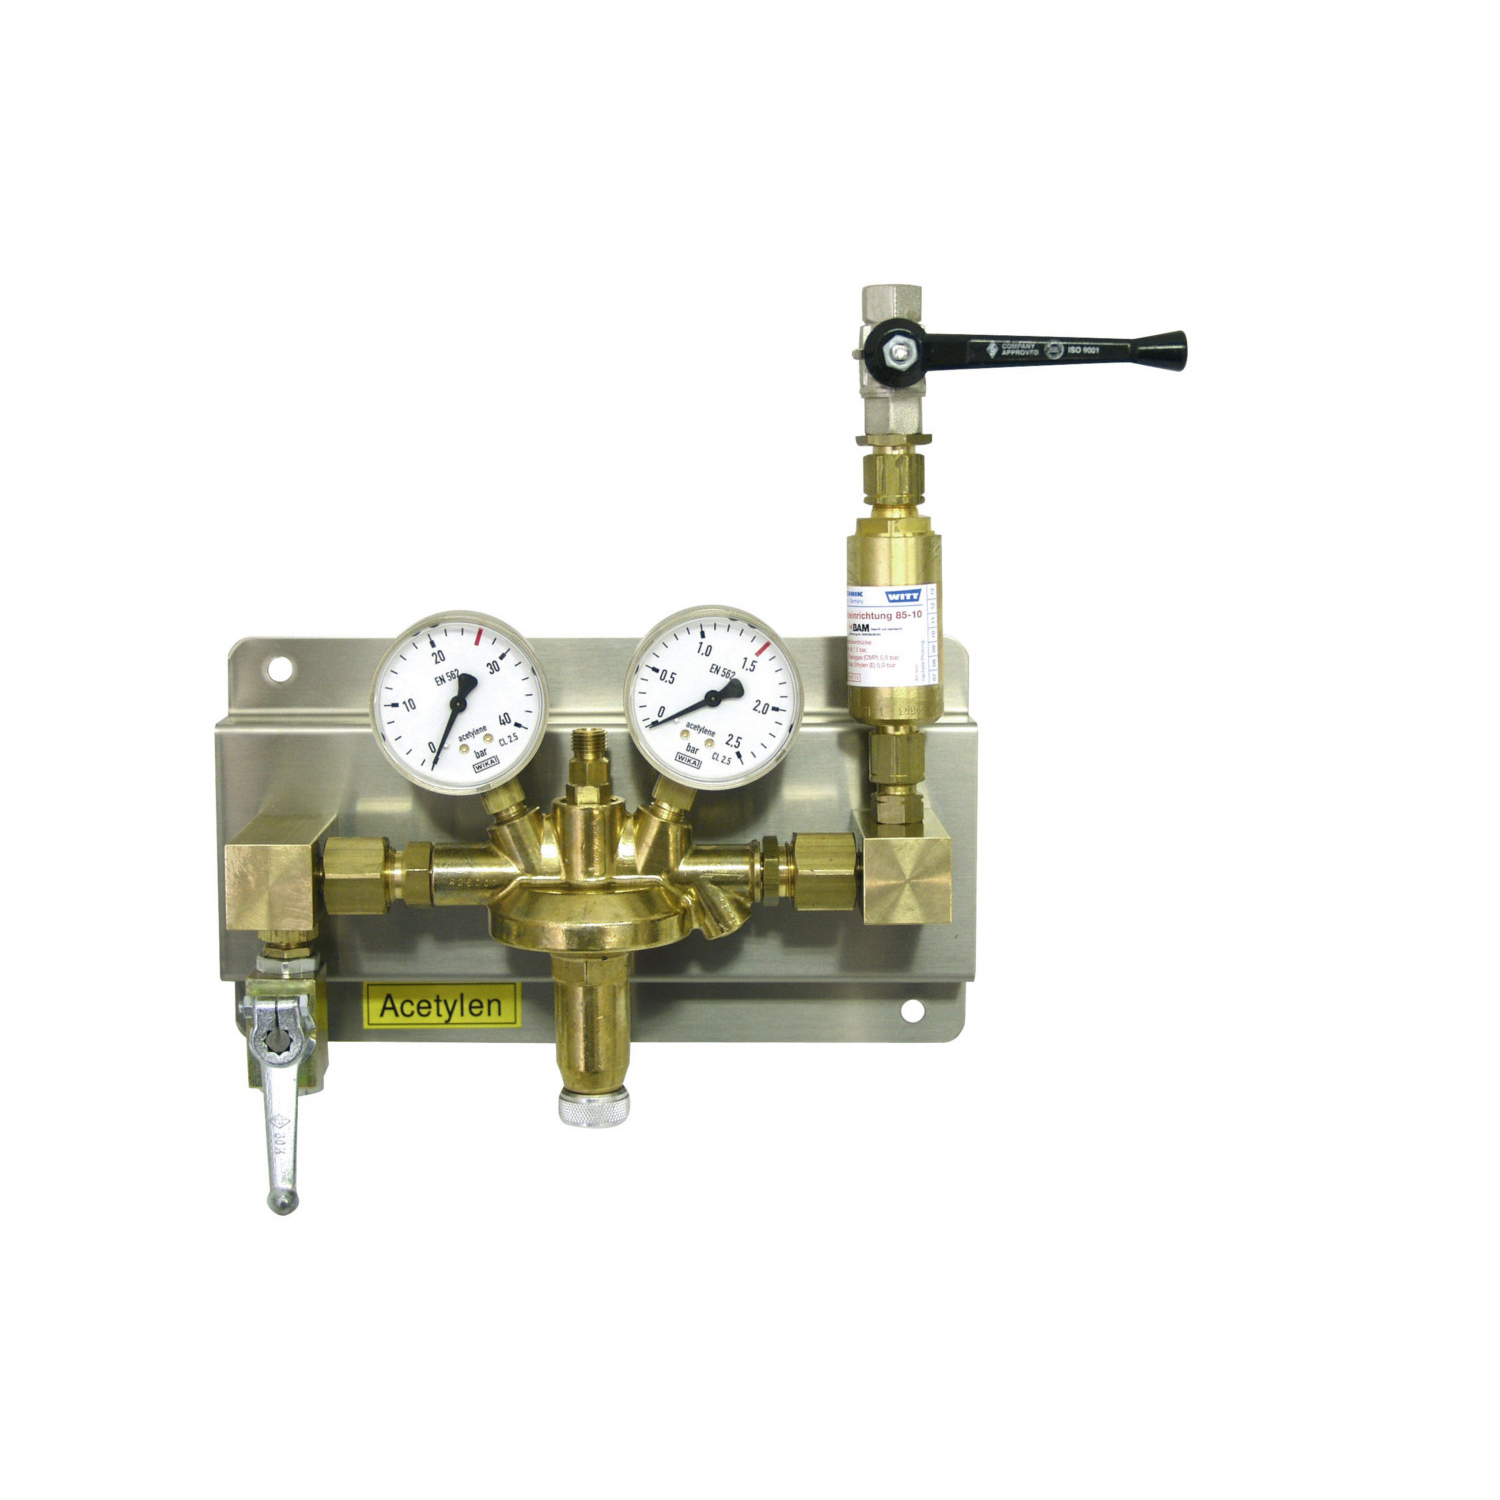 Pressure Regulating Station 684NG (acetylene)